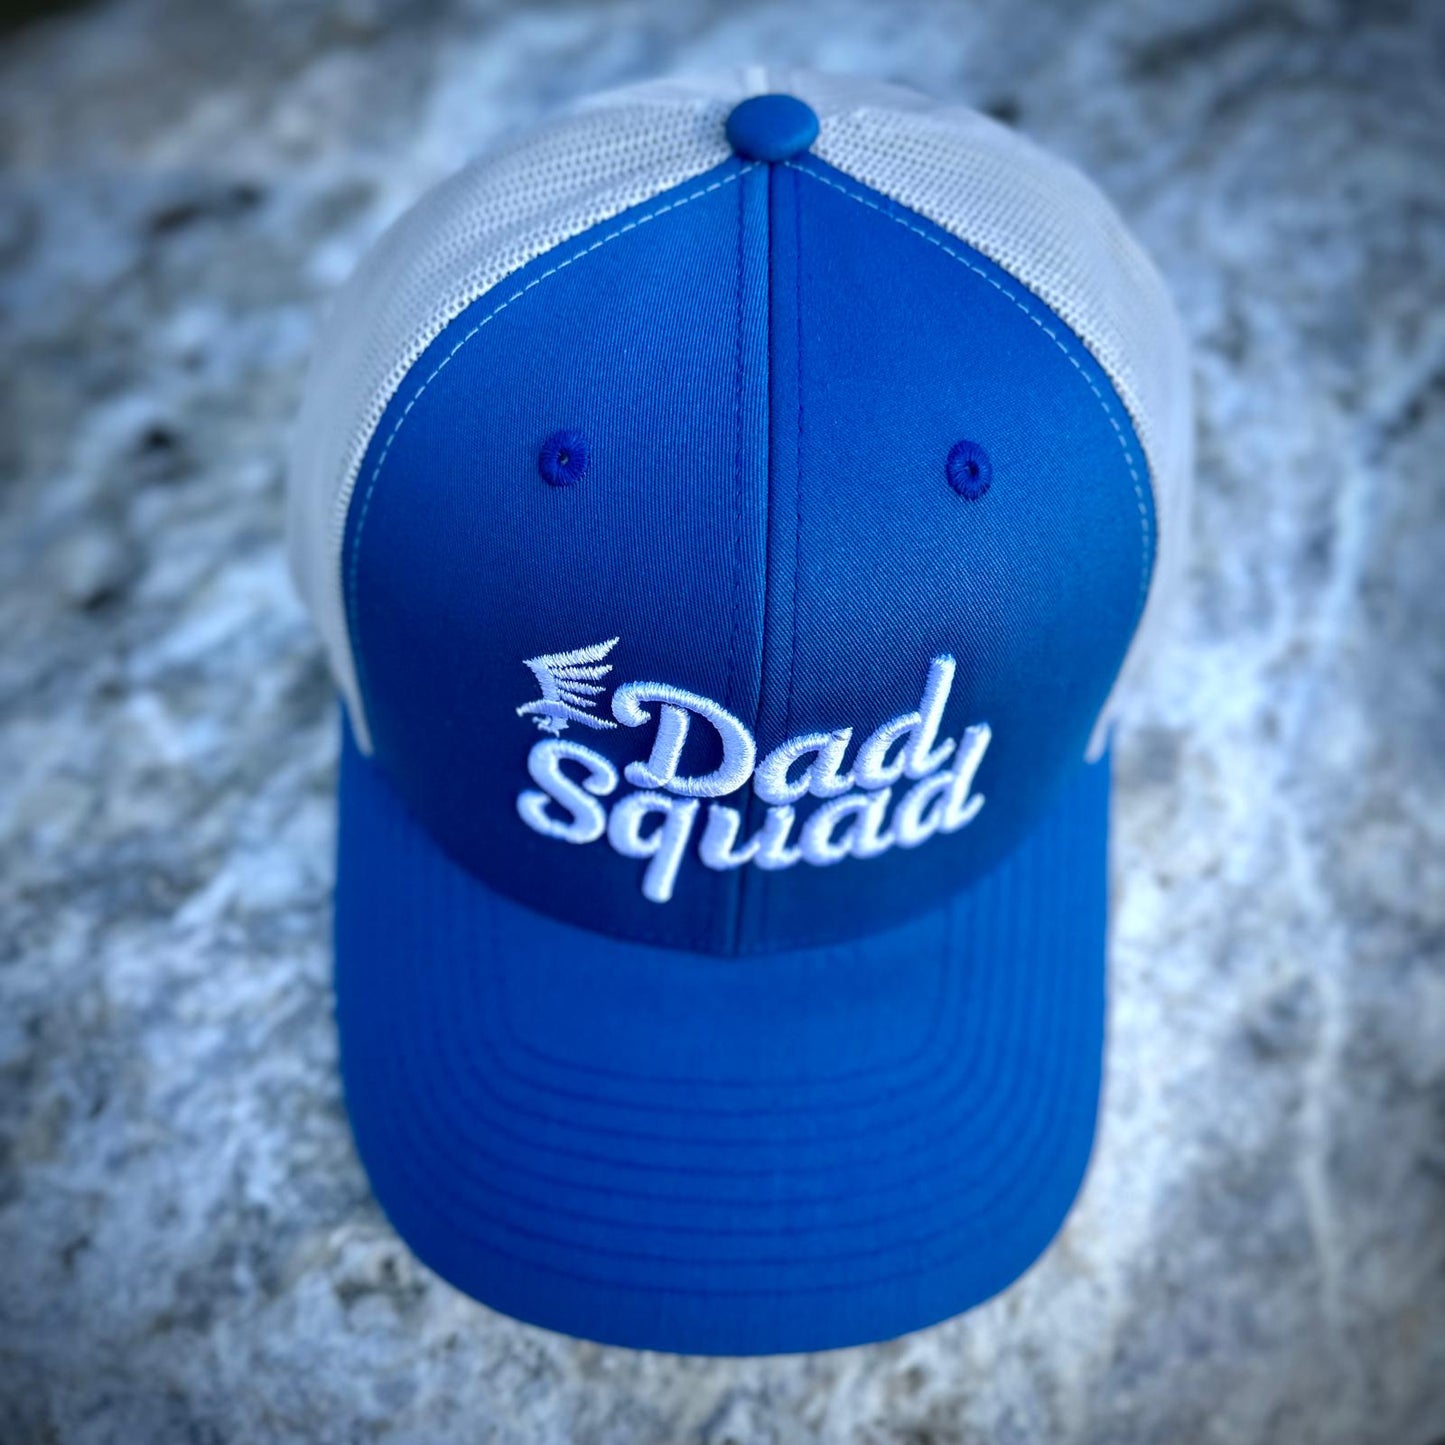 Dad Squad Mid Rise Trucker Cap - Steel Blue